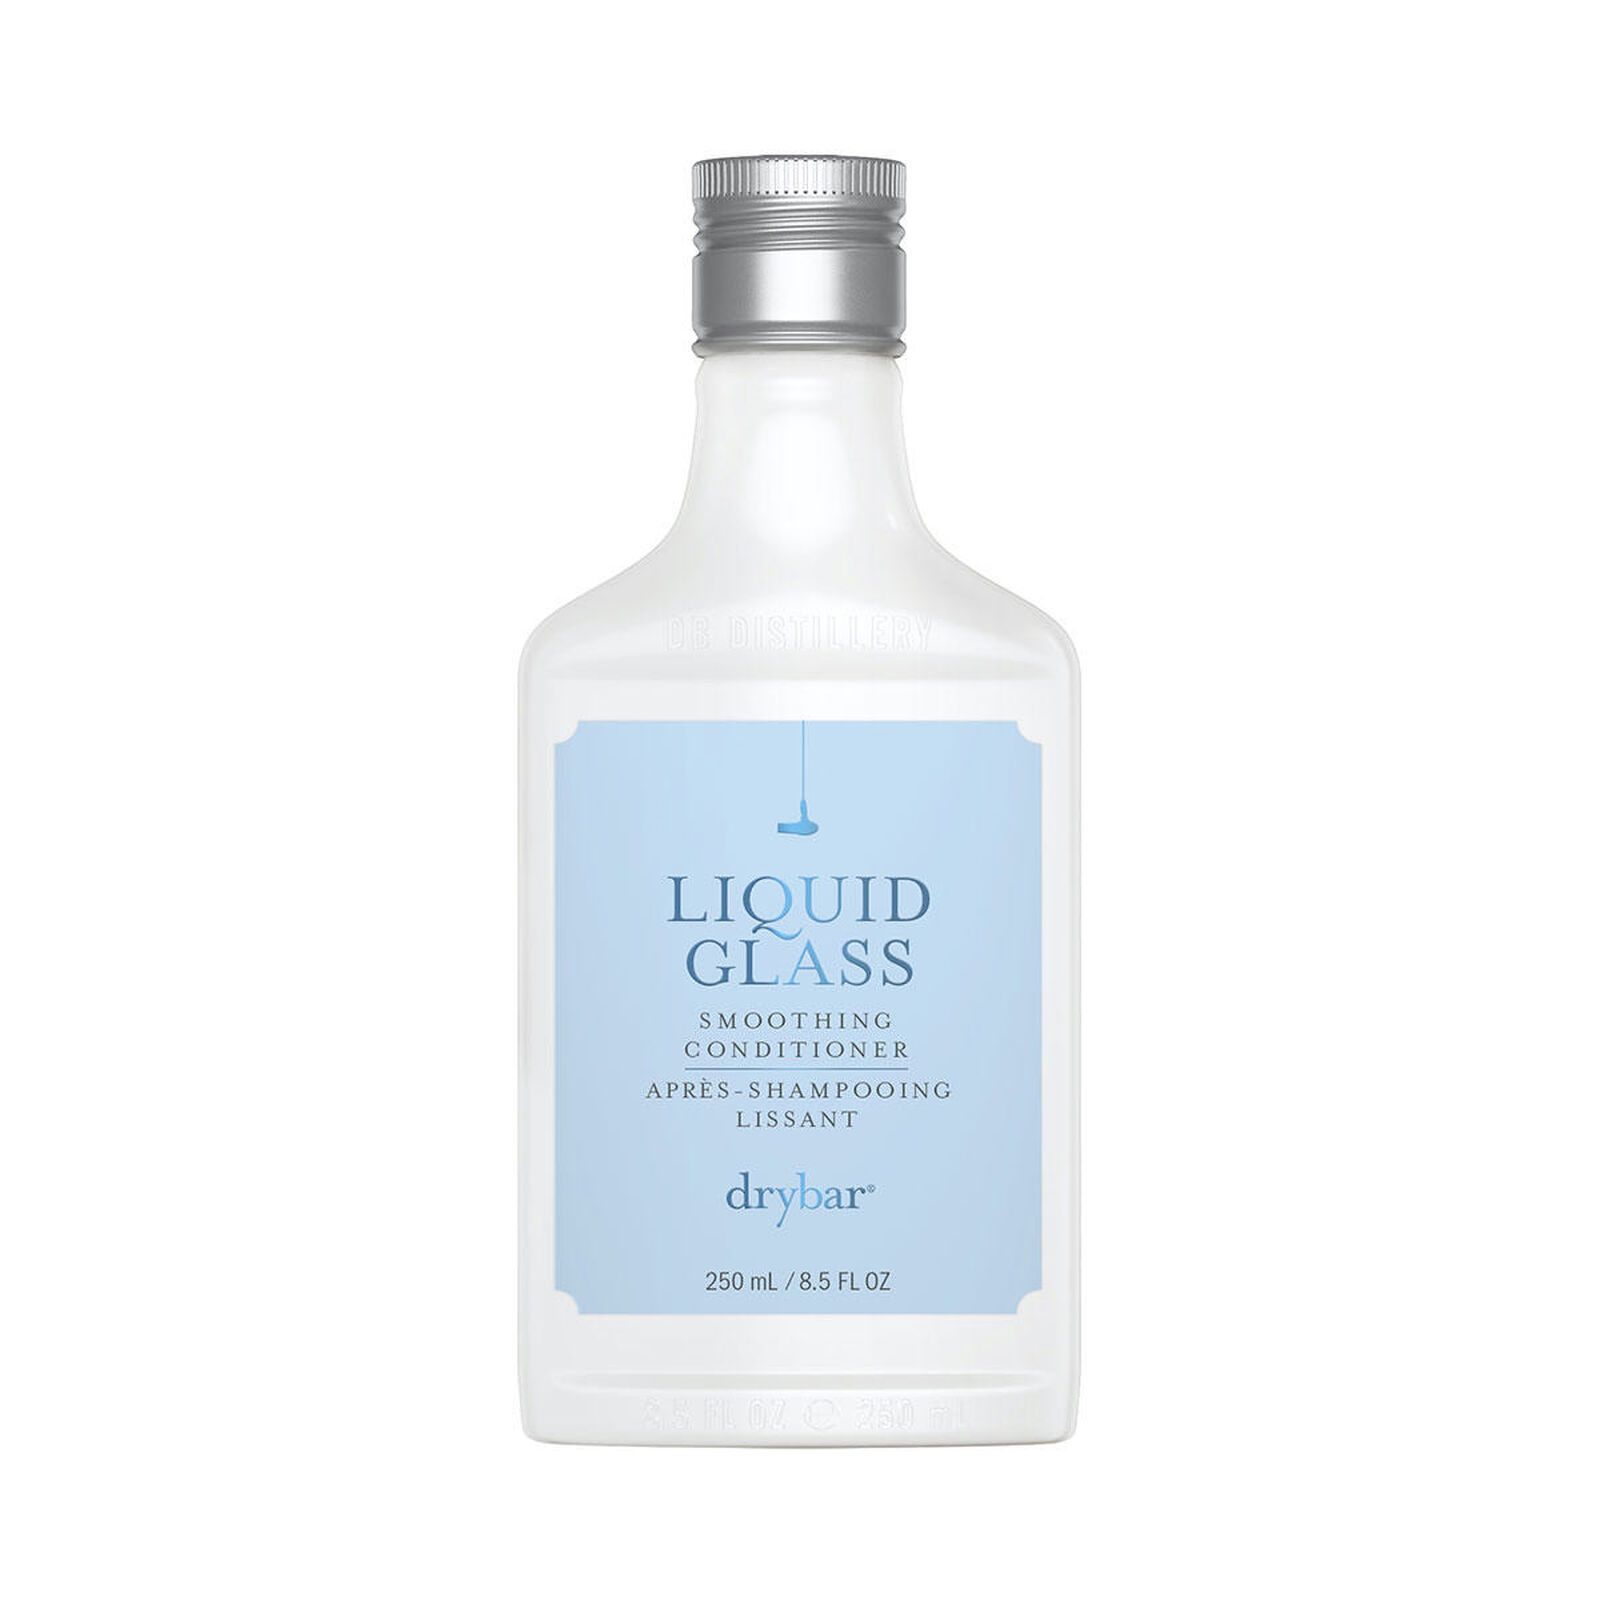 Drybar Liquid Glass Smoothing Conditioner | Beauty Brands